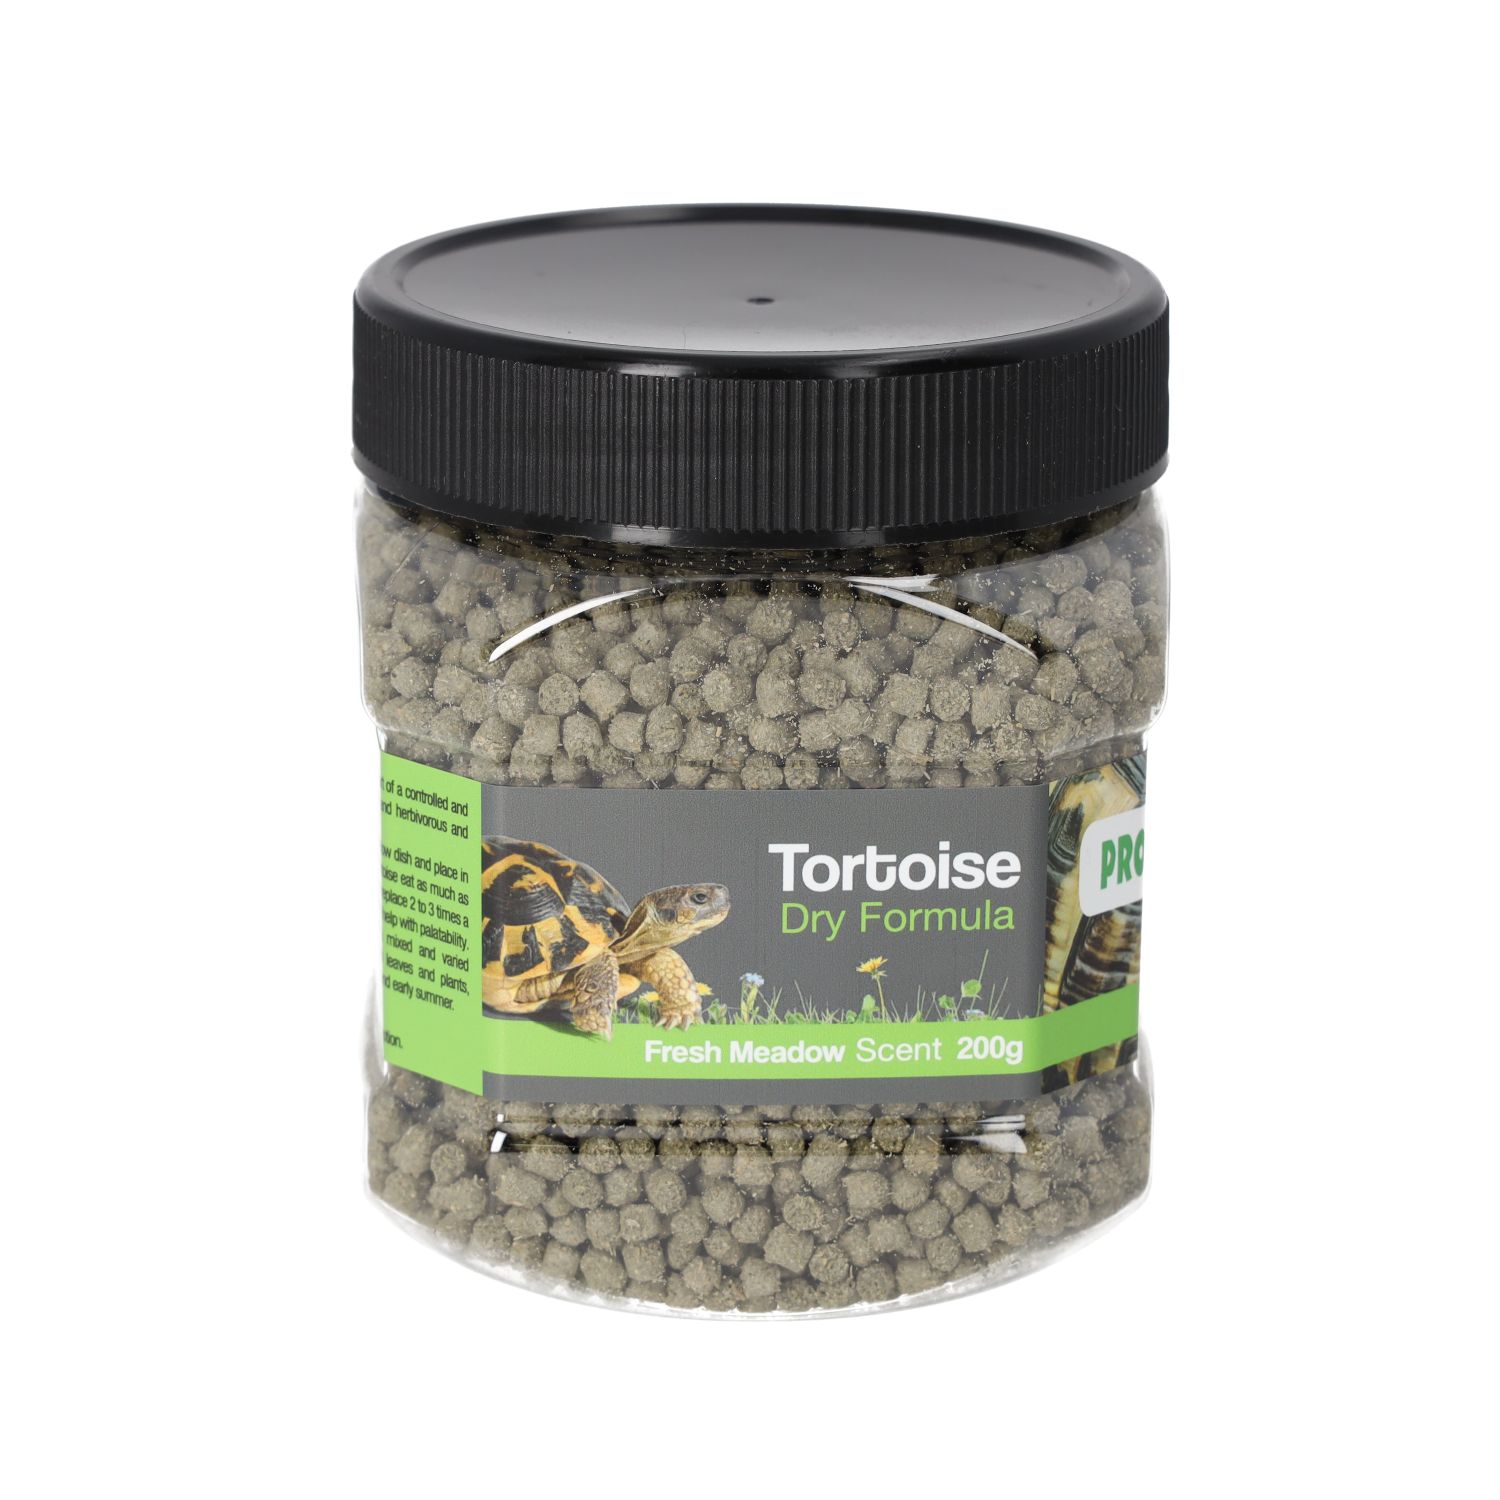 PR Tortoise MEADOW Dry Formula, 200g, FPT540